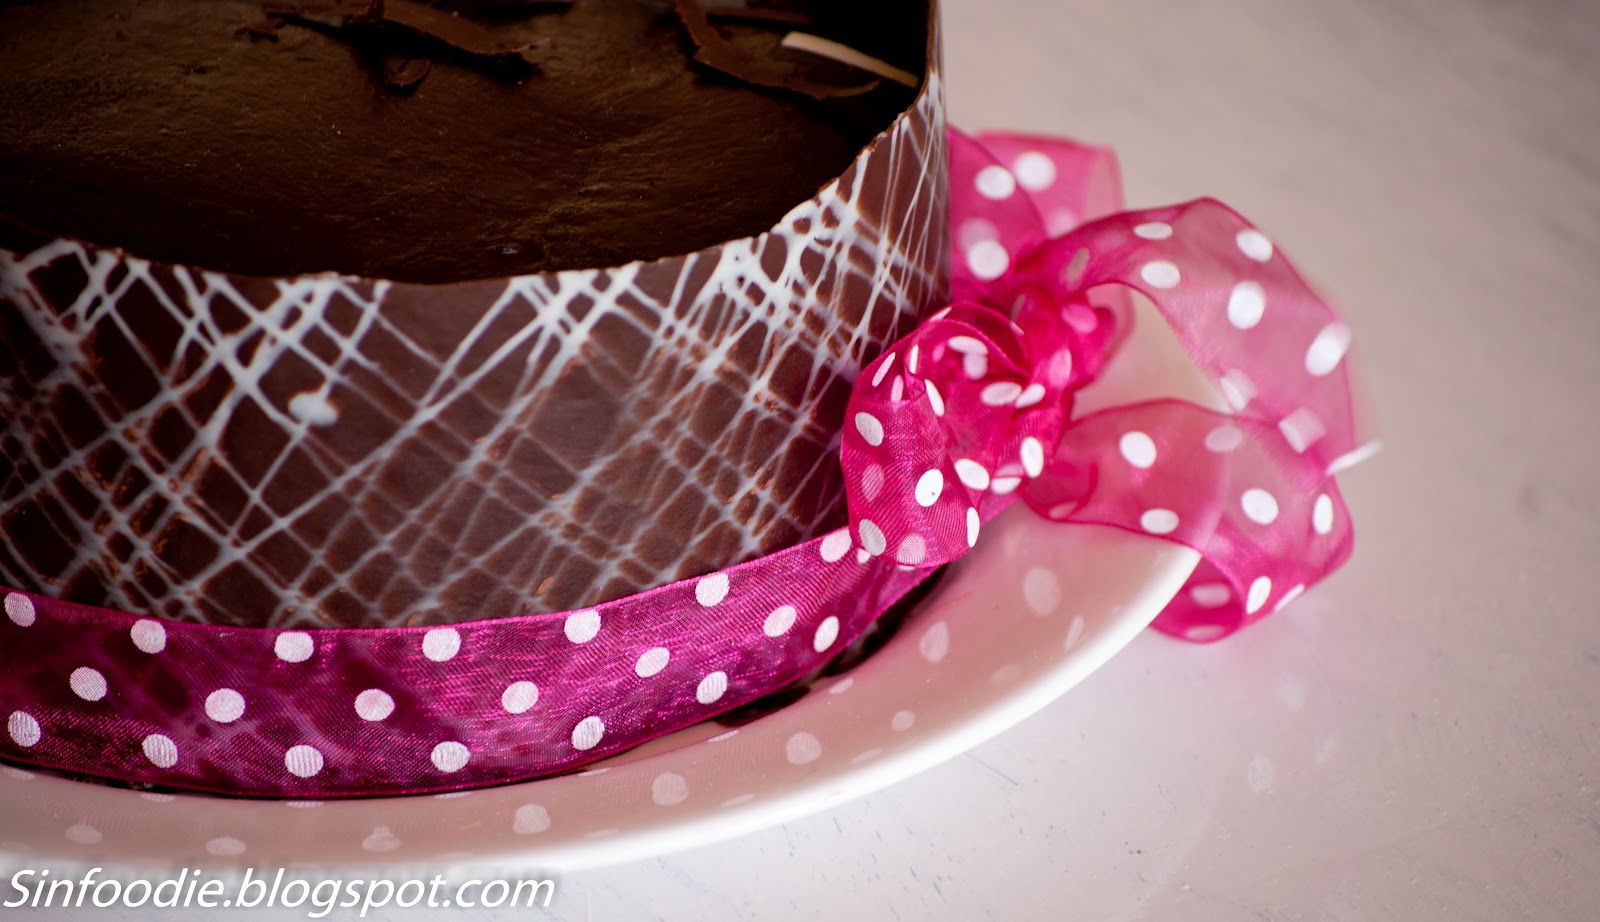 chocolate ganache cake decorations Chocolate Cake with Chocolate Collar